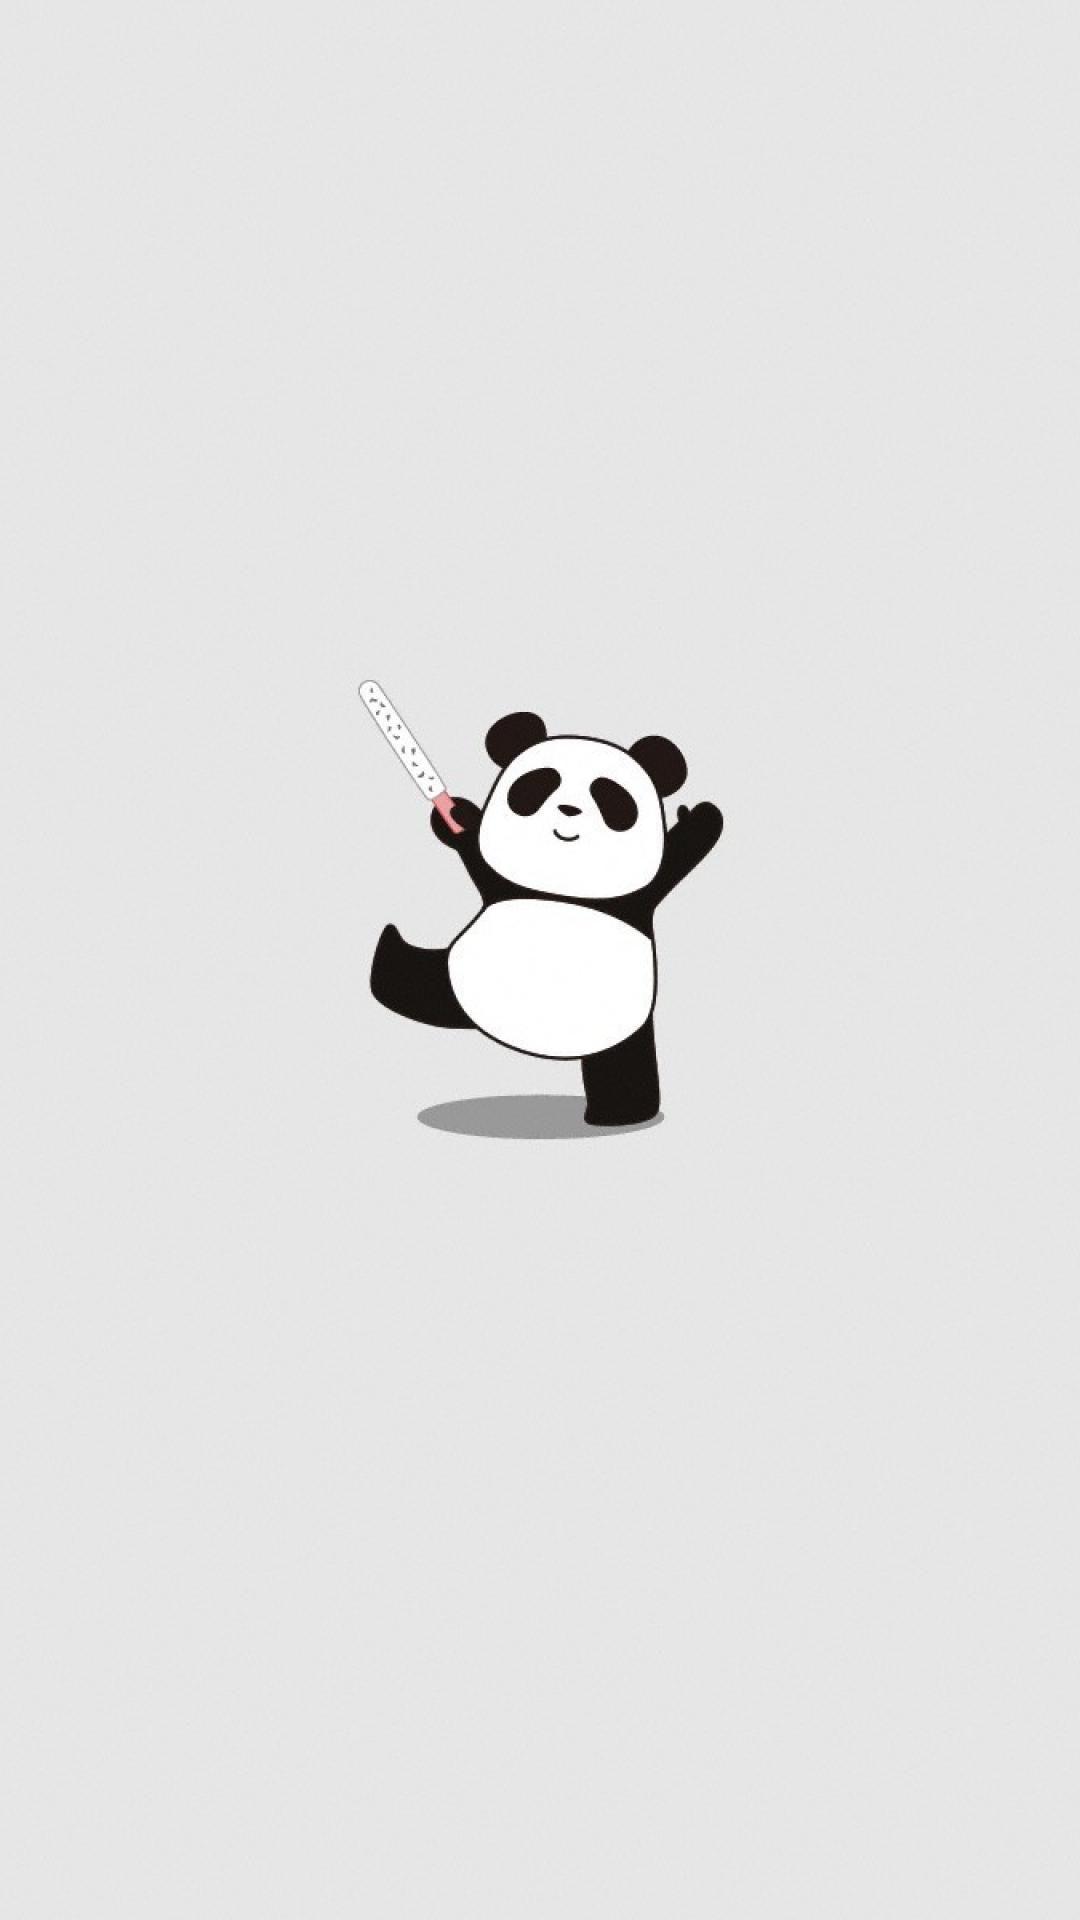 Pocky panda bears wallpaper